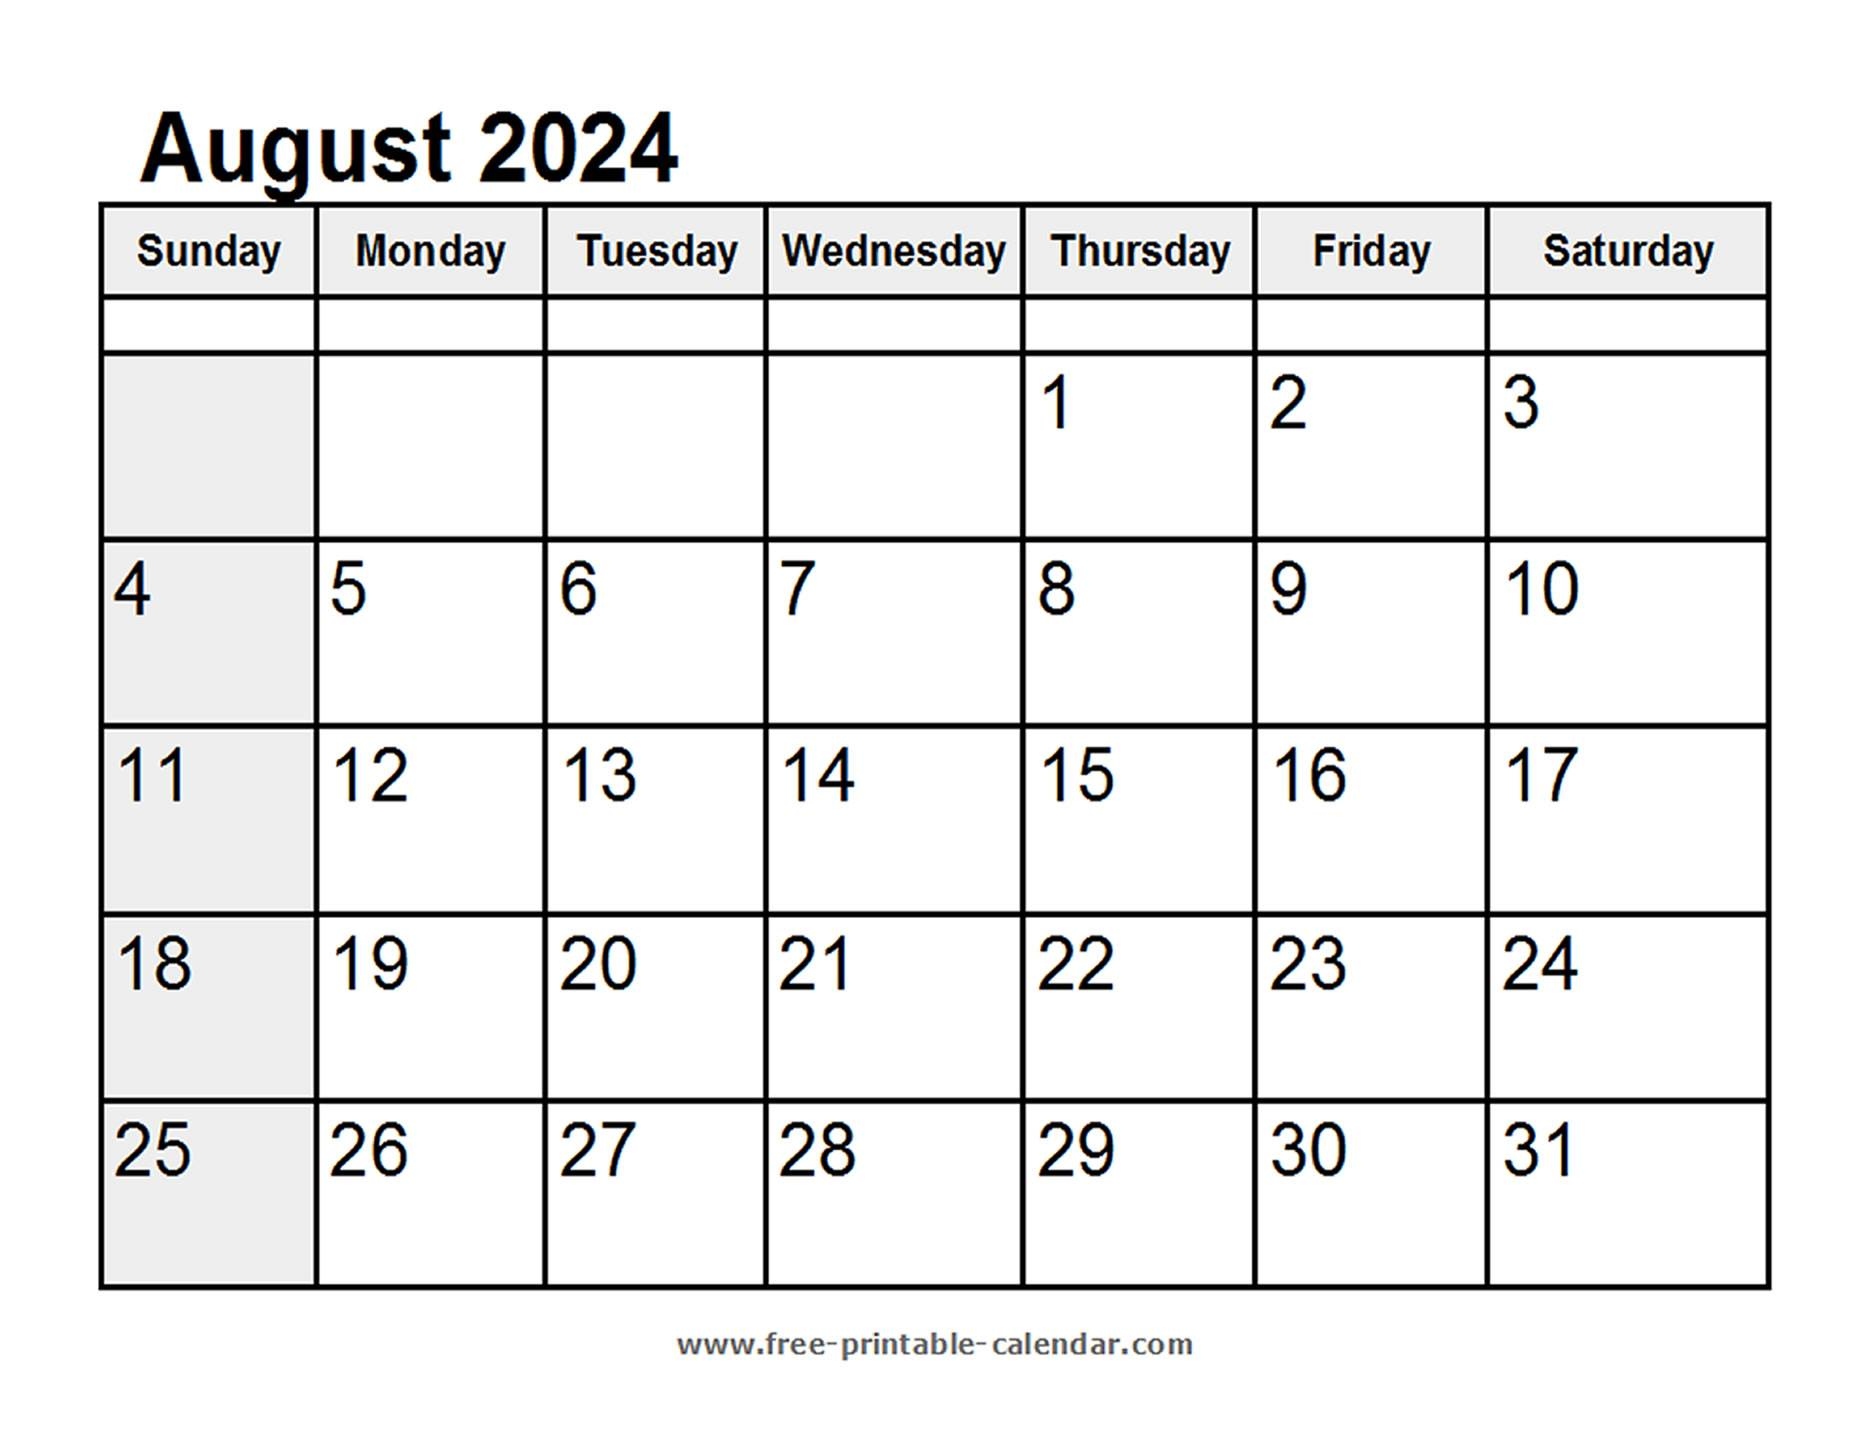 Calendar August 2024 - Free-Printable-Calendar for Free Printable Calendar August 2024 Uk